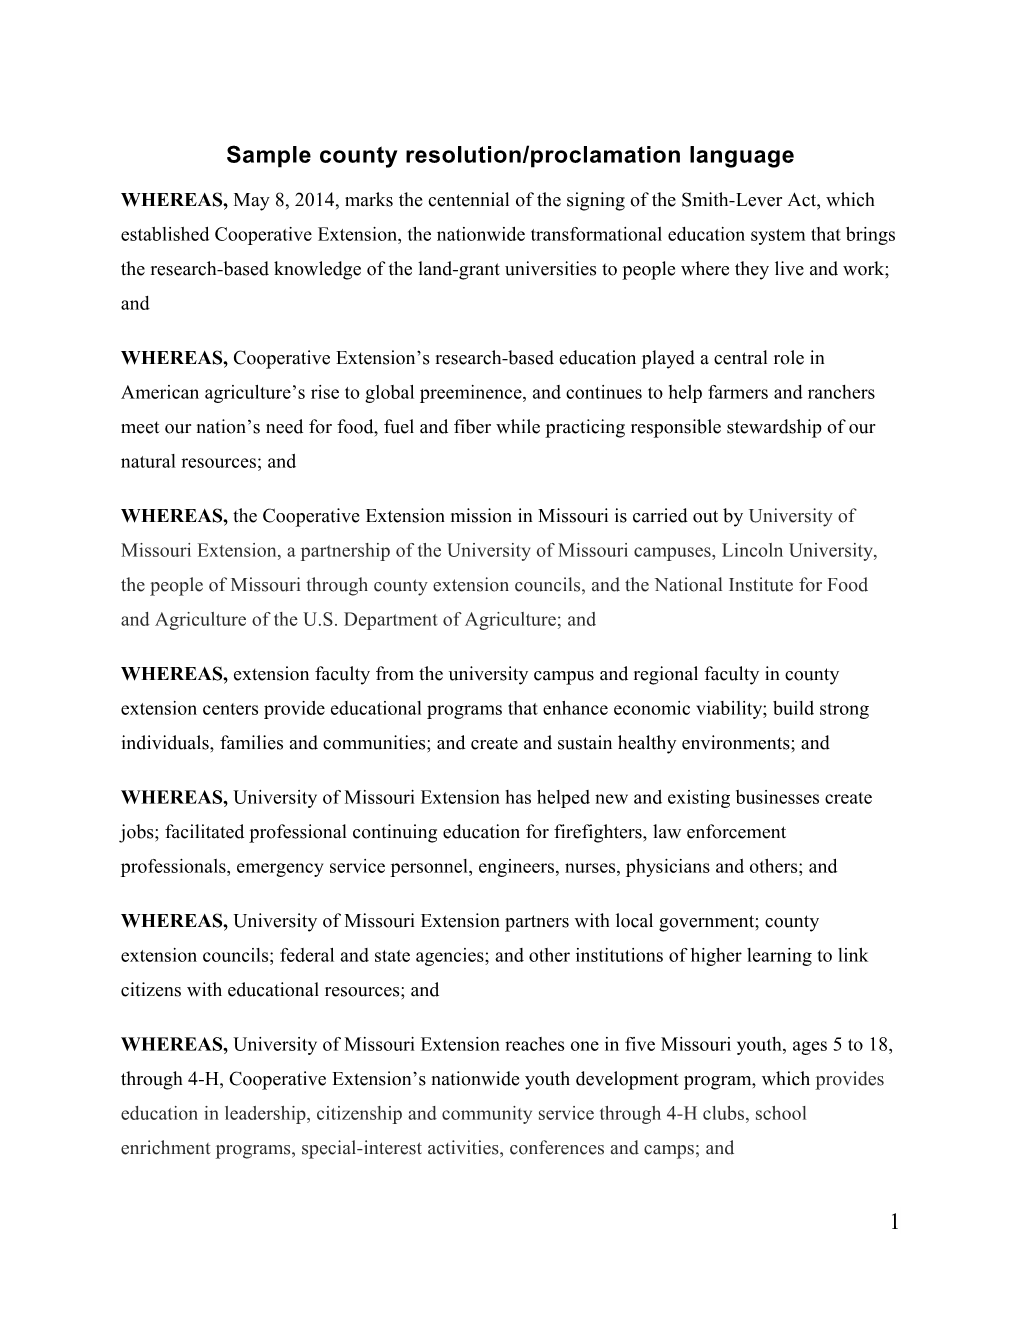 Sample County Resolution/Proclamation Language